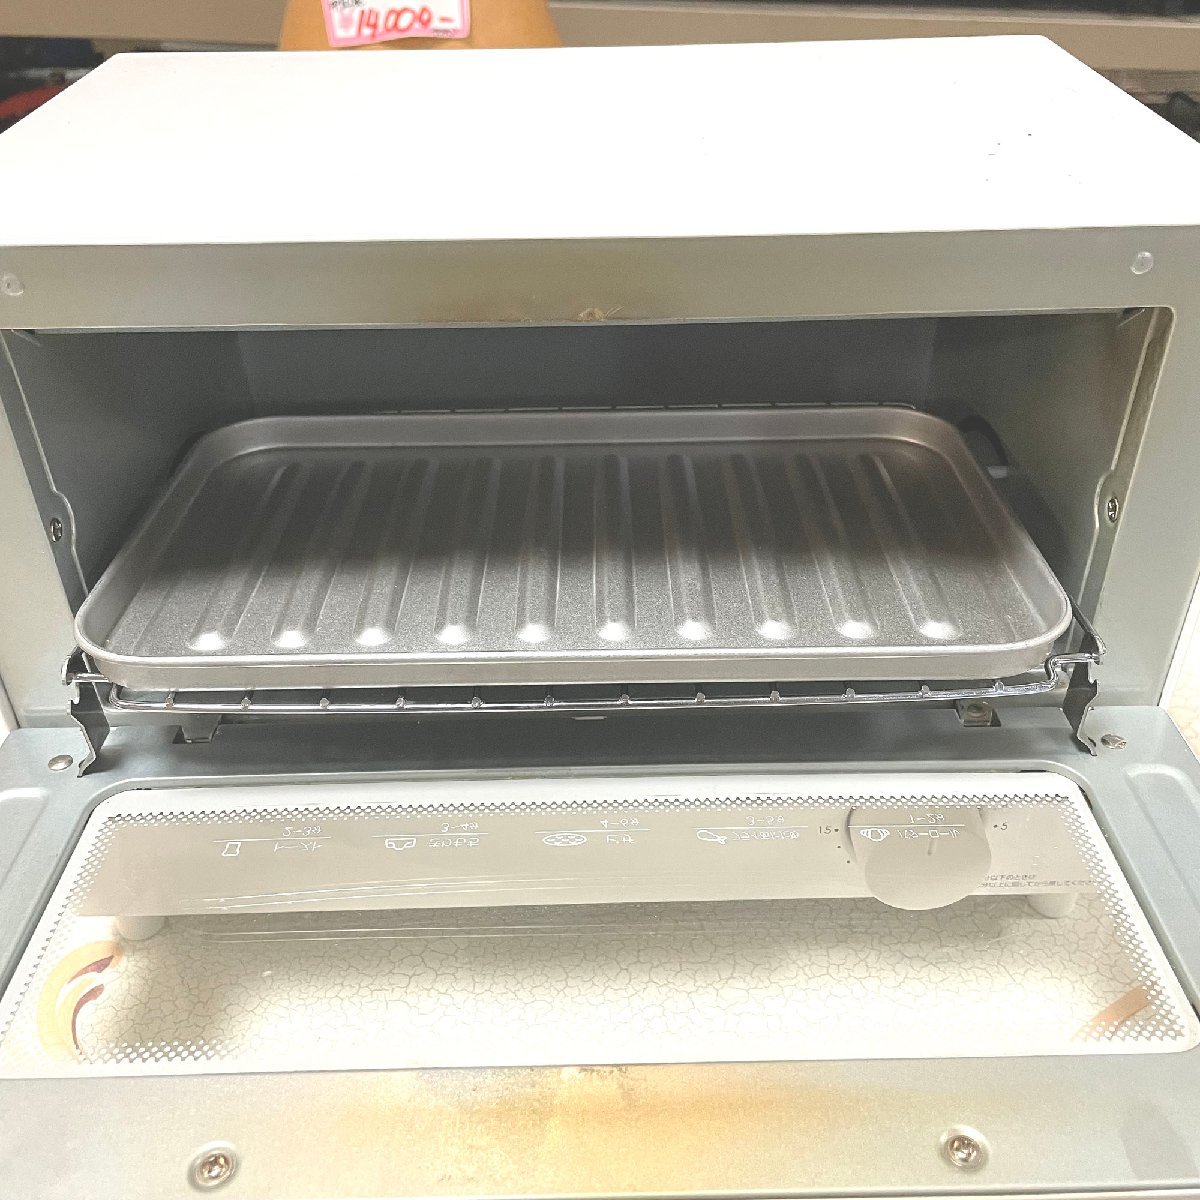  б/у *nitoli* печь тостер NT07-WH 2021 год производства белый 